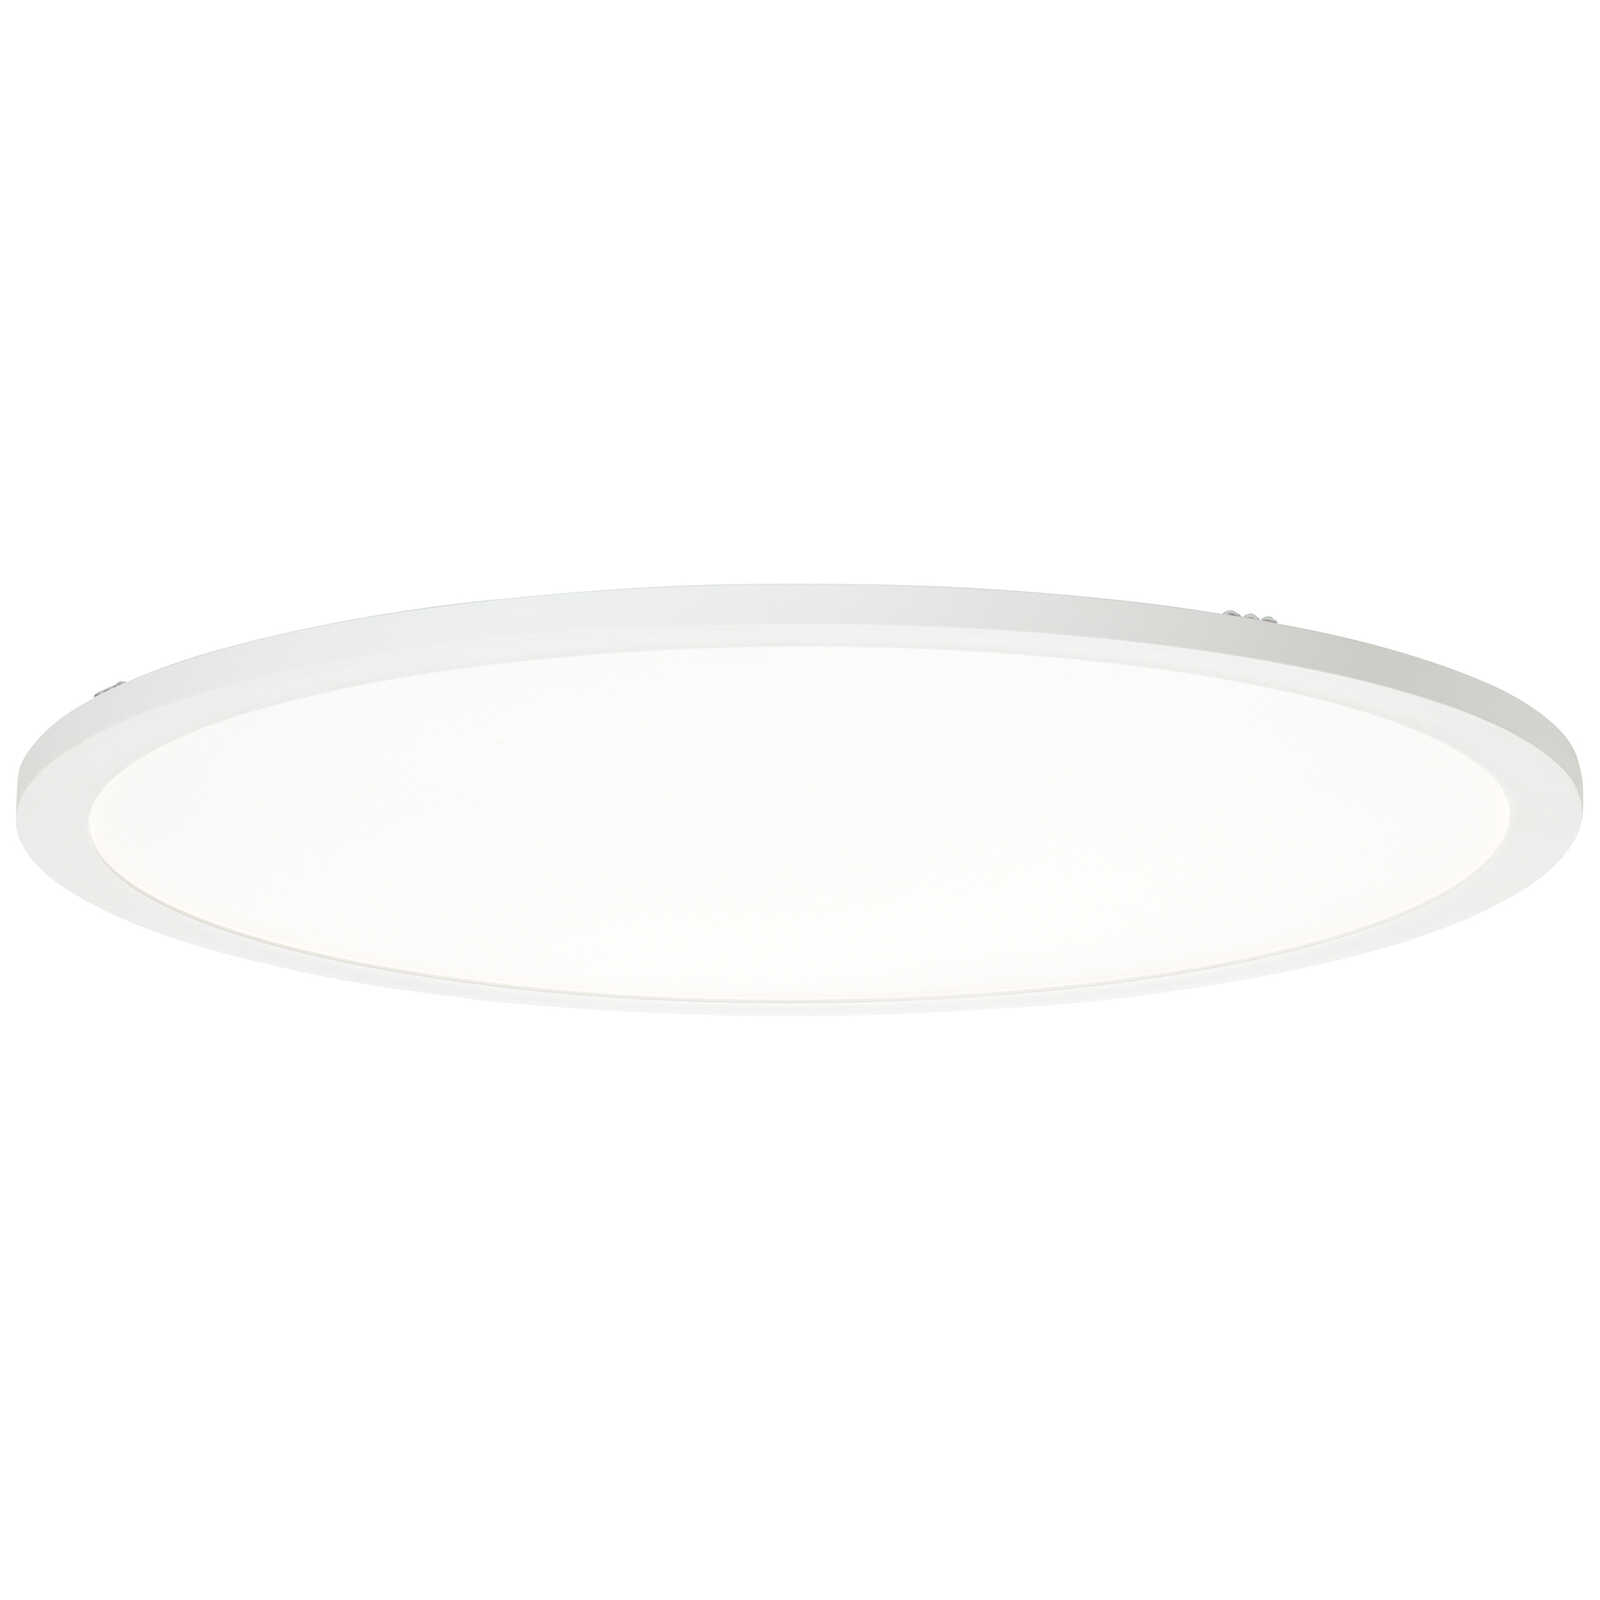             Plastic ceiling light - Aaron 8 - White
        